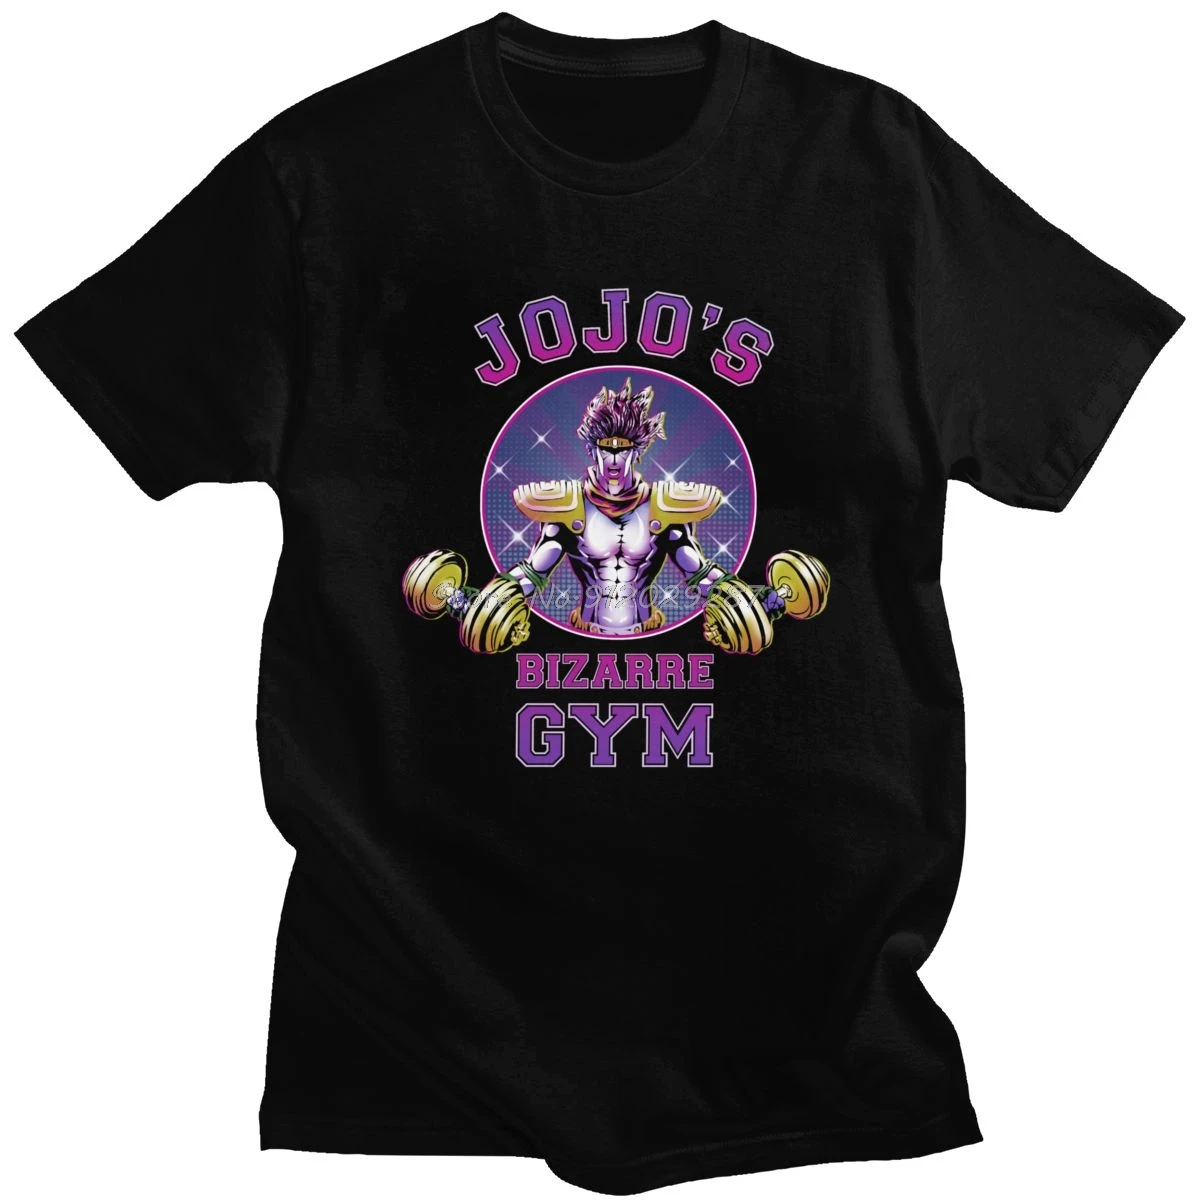 Funny-Men-s-Jotaro-Kujo-Gym-T-Shirt-Short-Sleeve-Cotton-Graphic-T-Shirts-Jojo-Bizarre